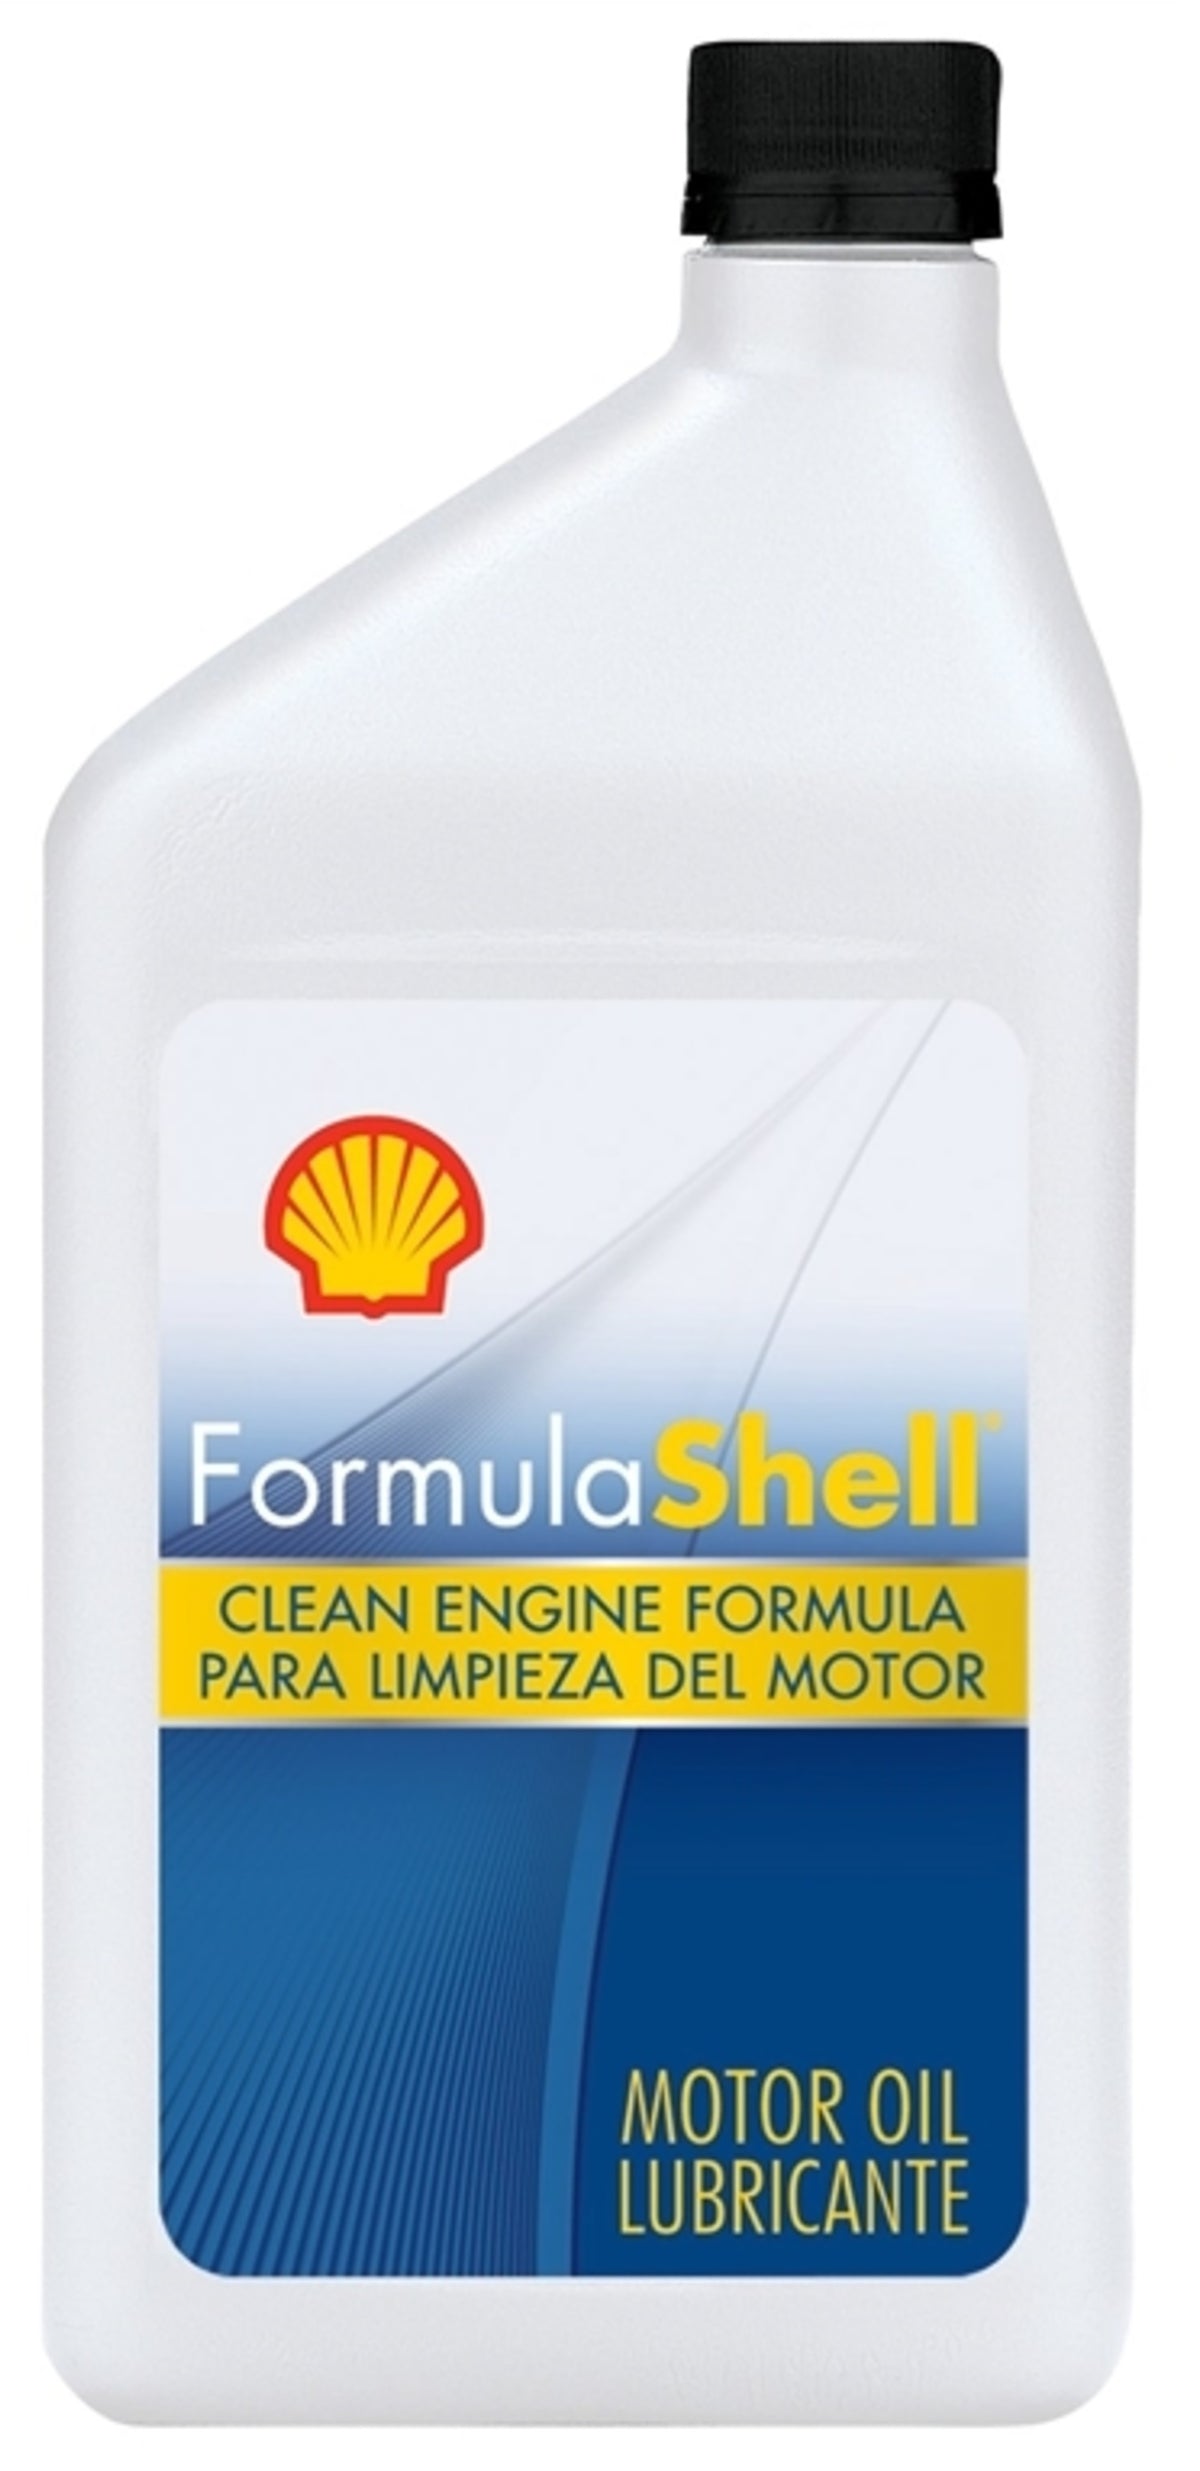 Formula Shell 550049475 Motor Oil, 1 Quart